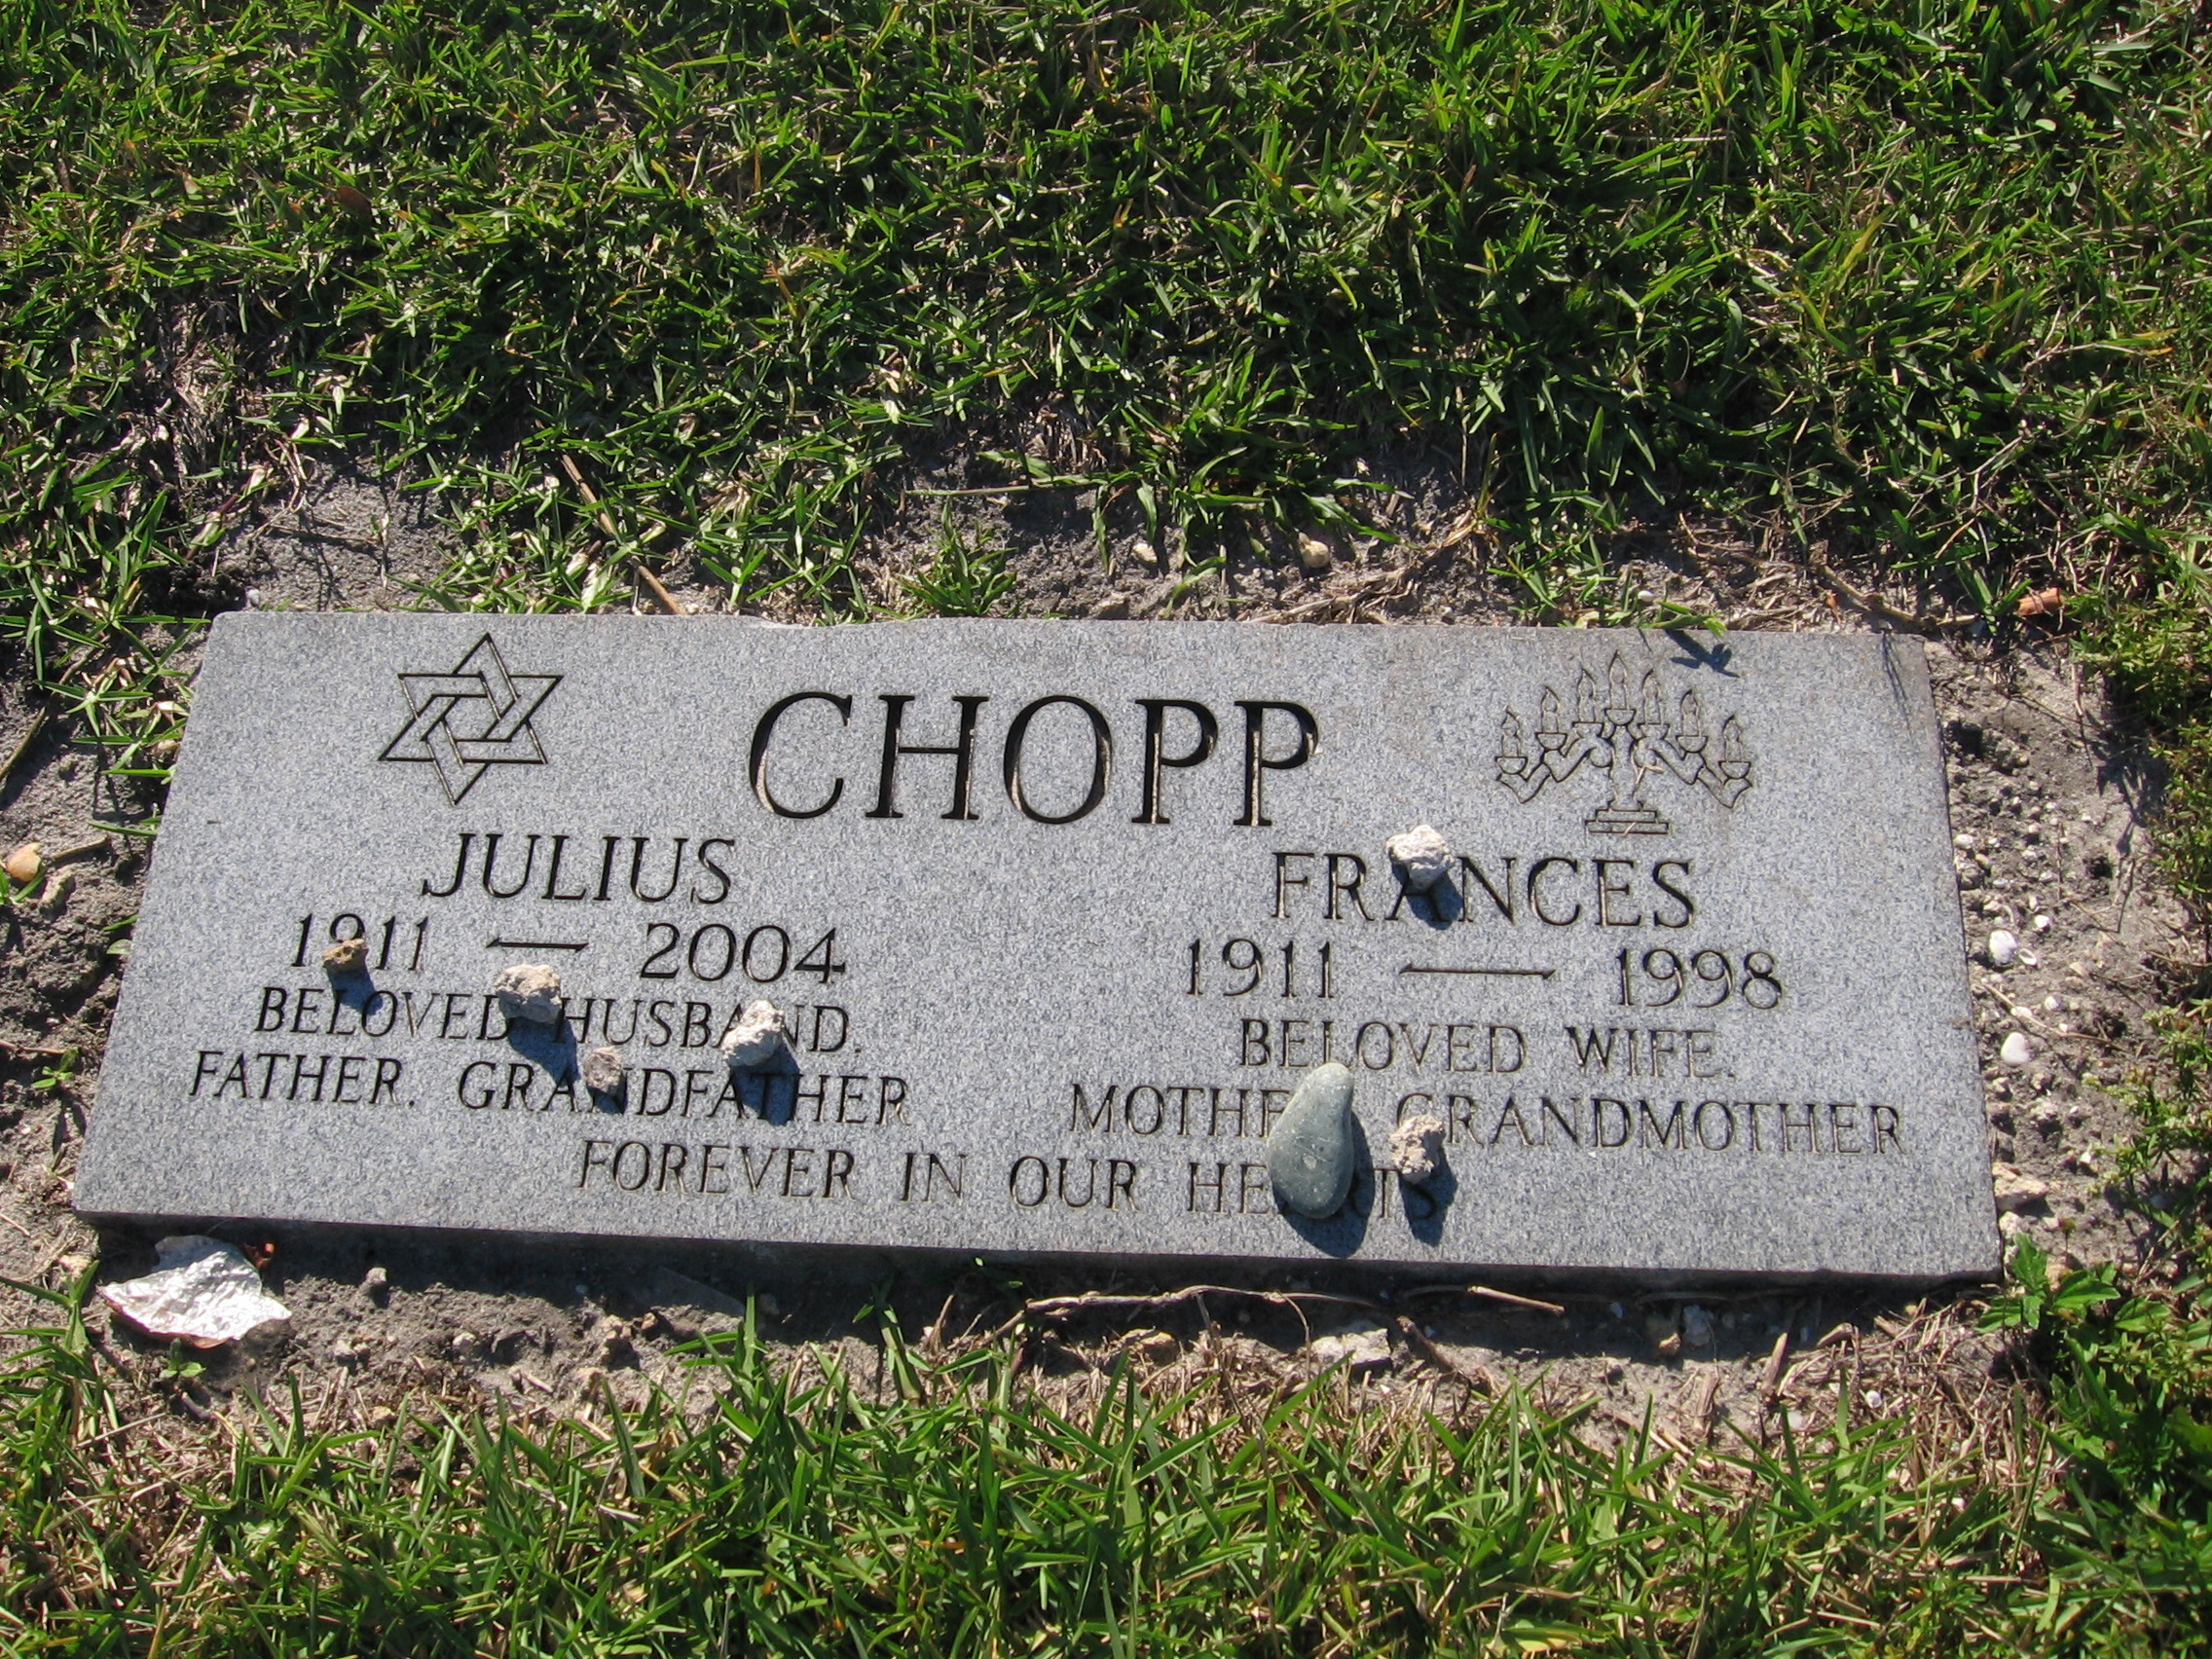 Julius Chopp